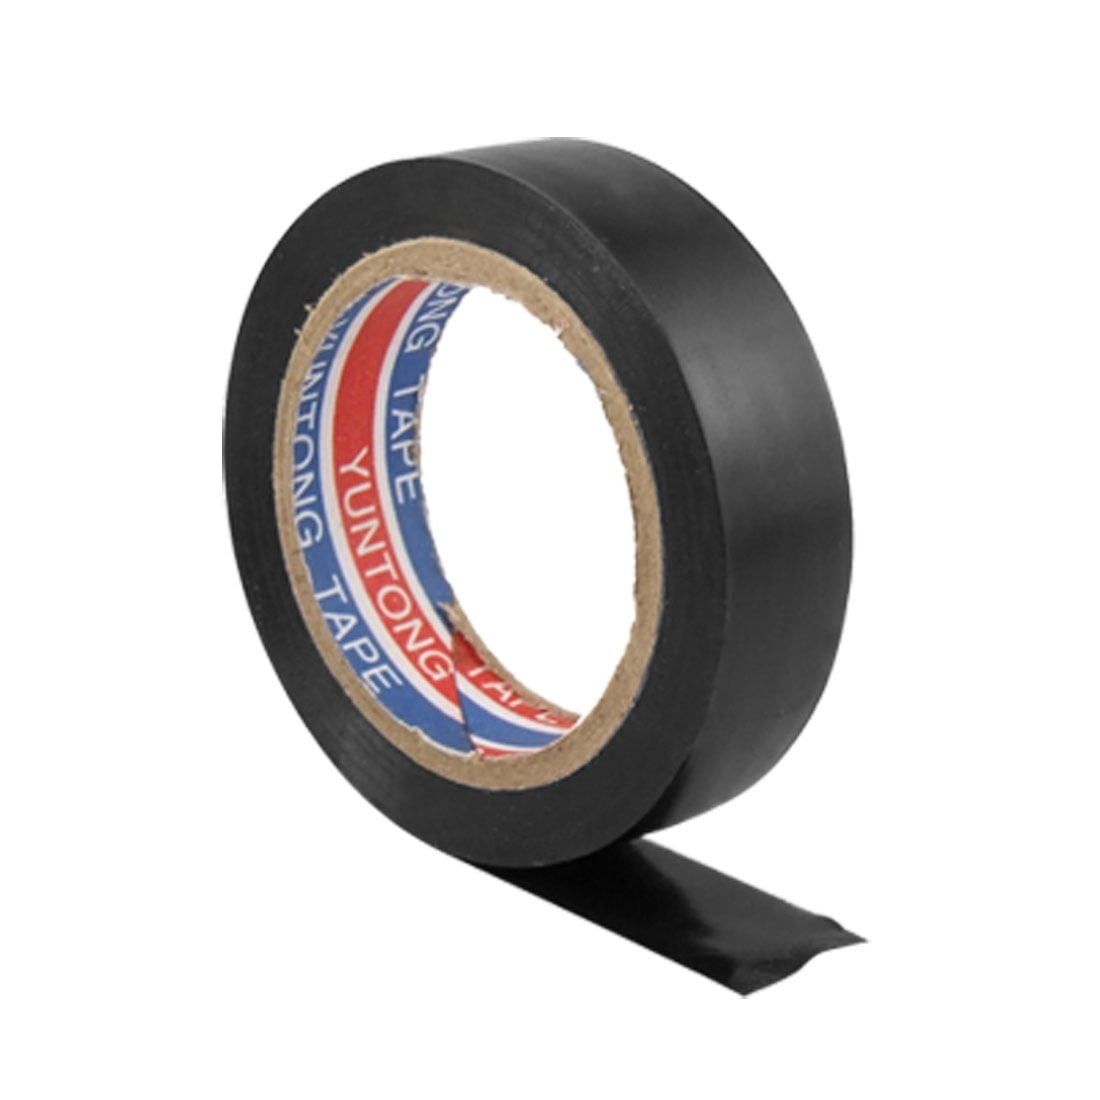 NEW Black Electrical insulation tape PVC Automotive 